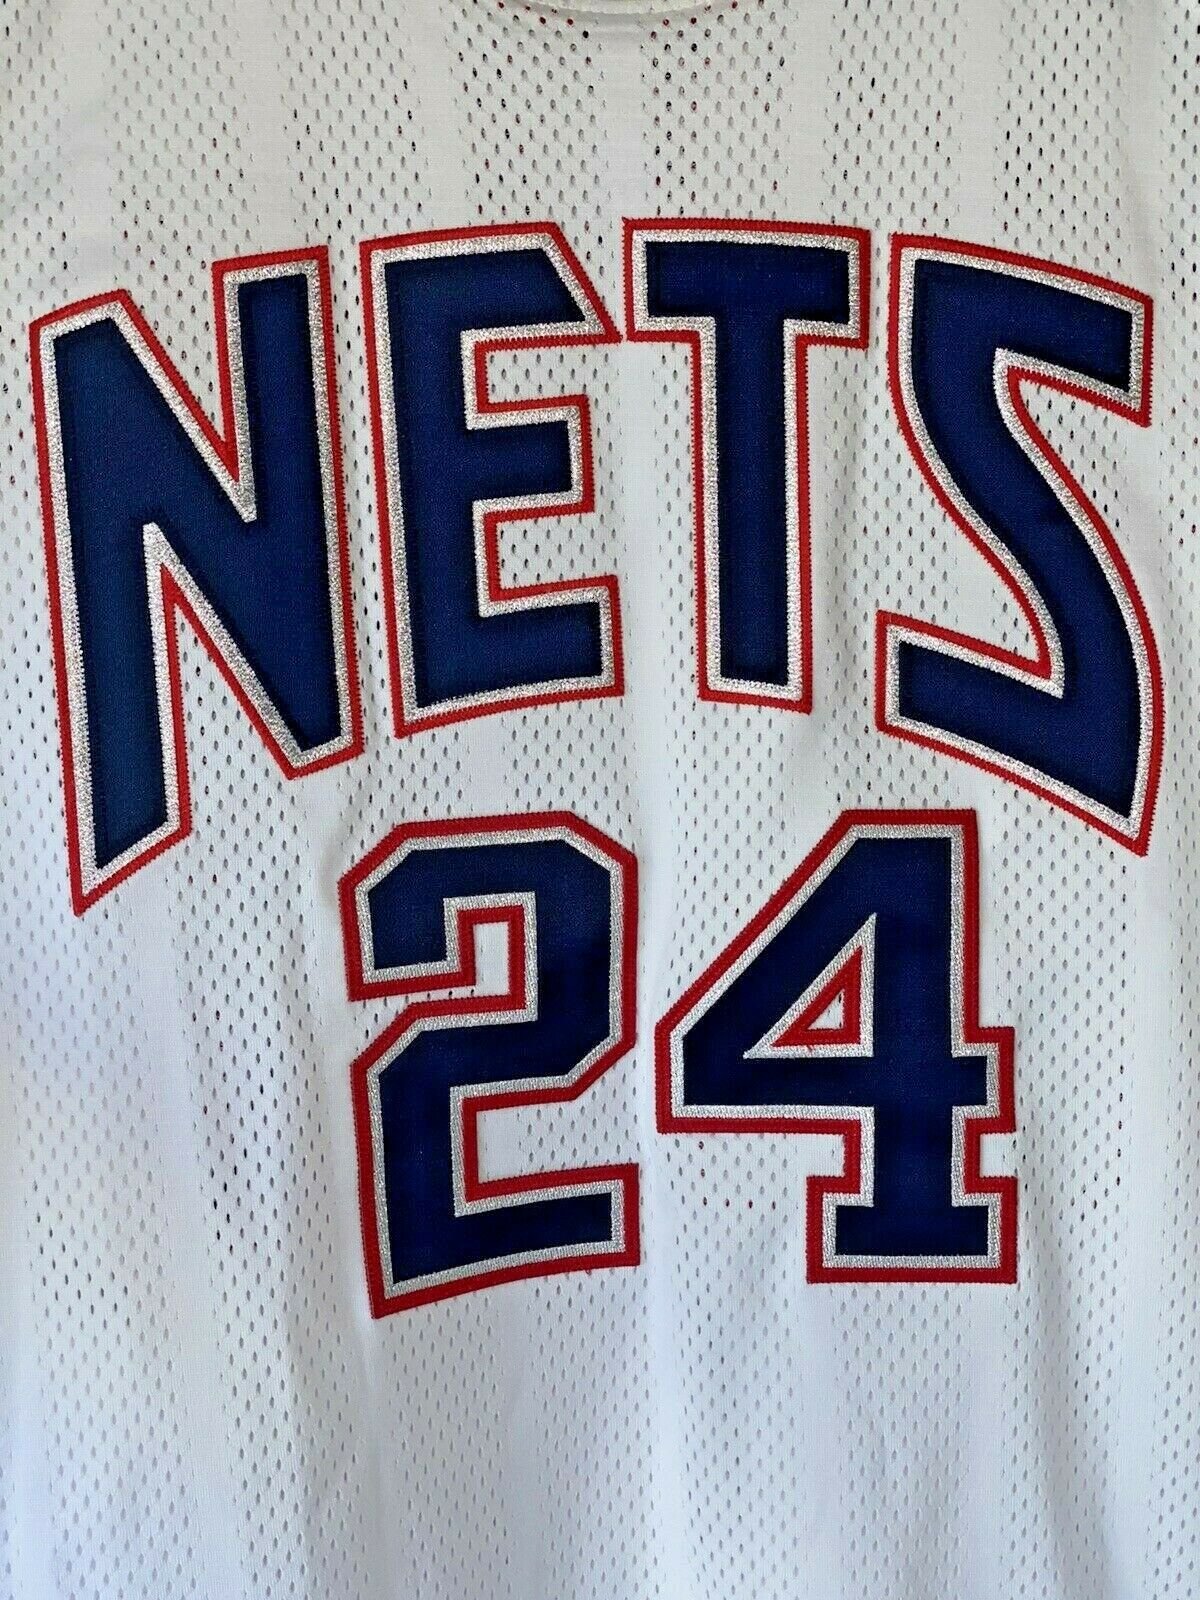 Jason Kidd Men's 52 XXL Reebok Authentic New Jersey Nets NBA Jersey White